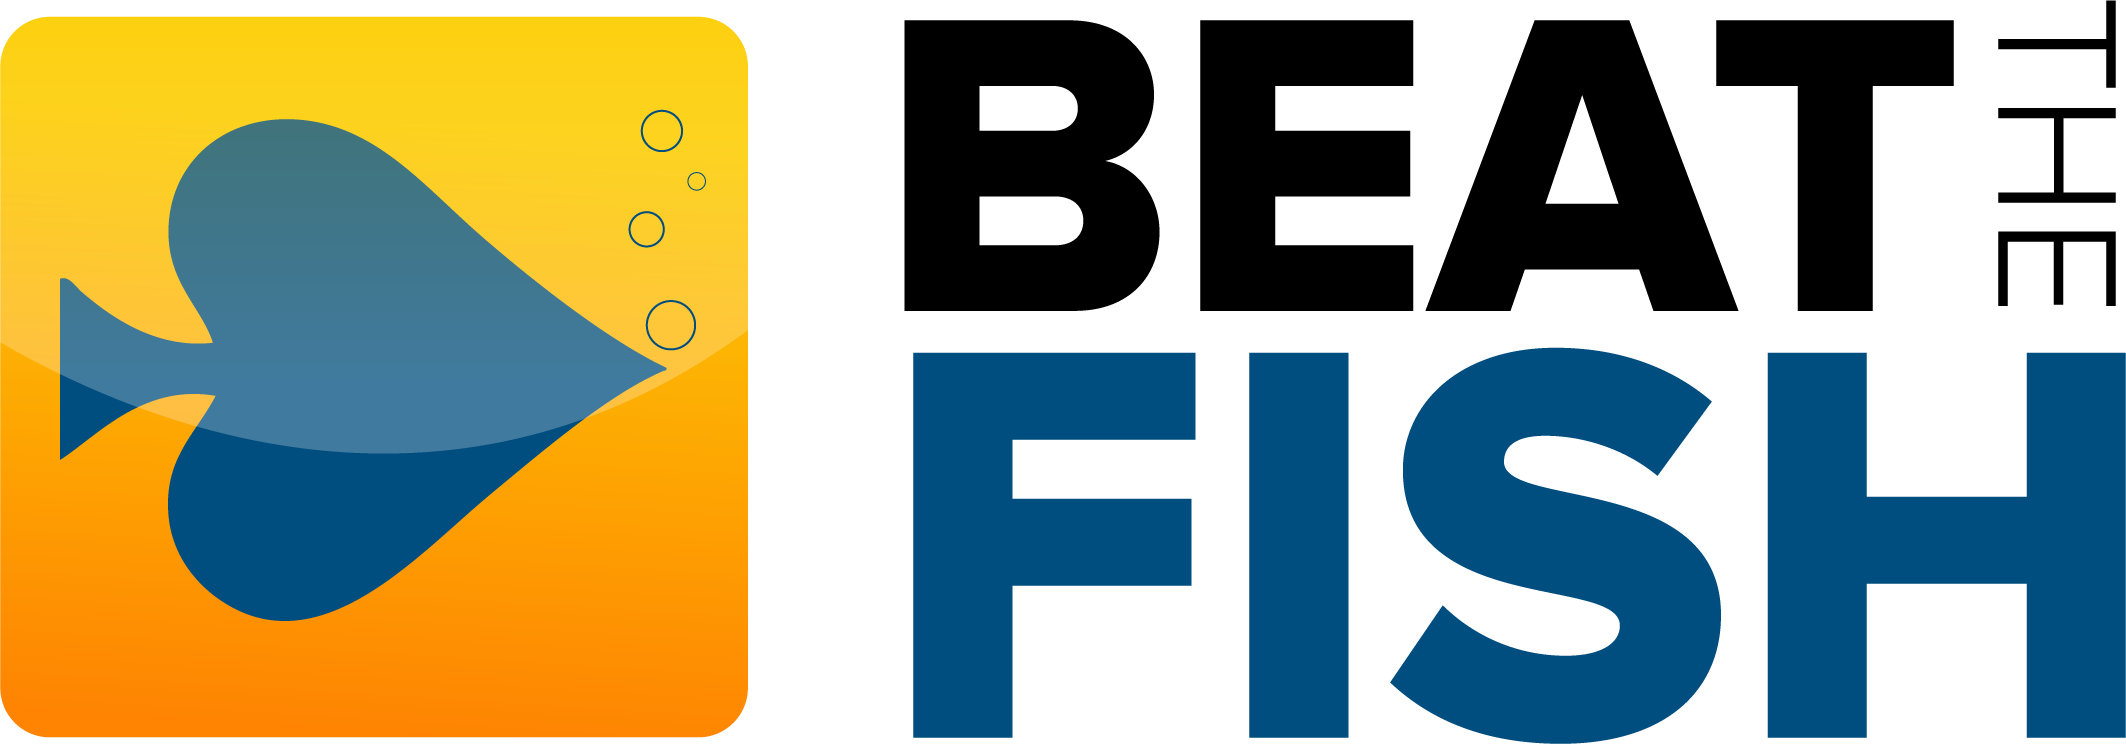 Beat-the-fish-logo.png